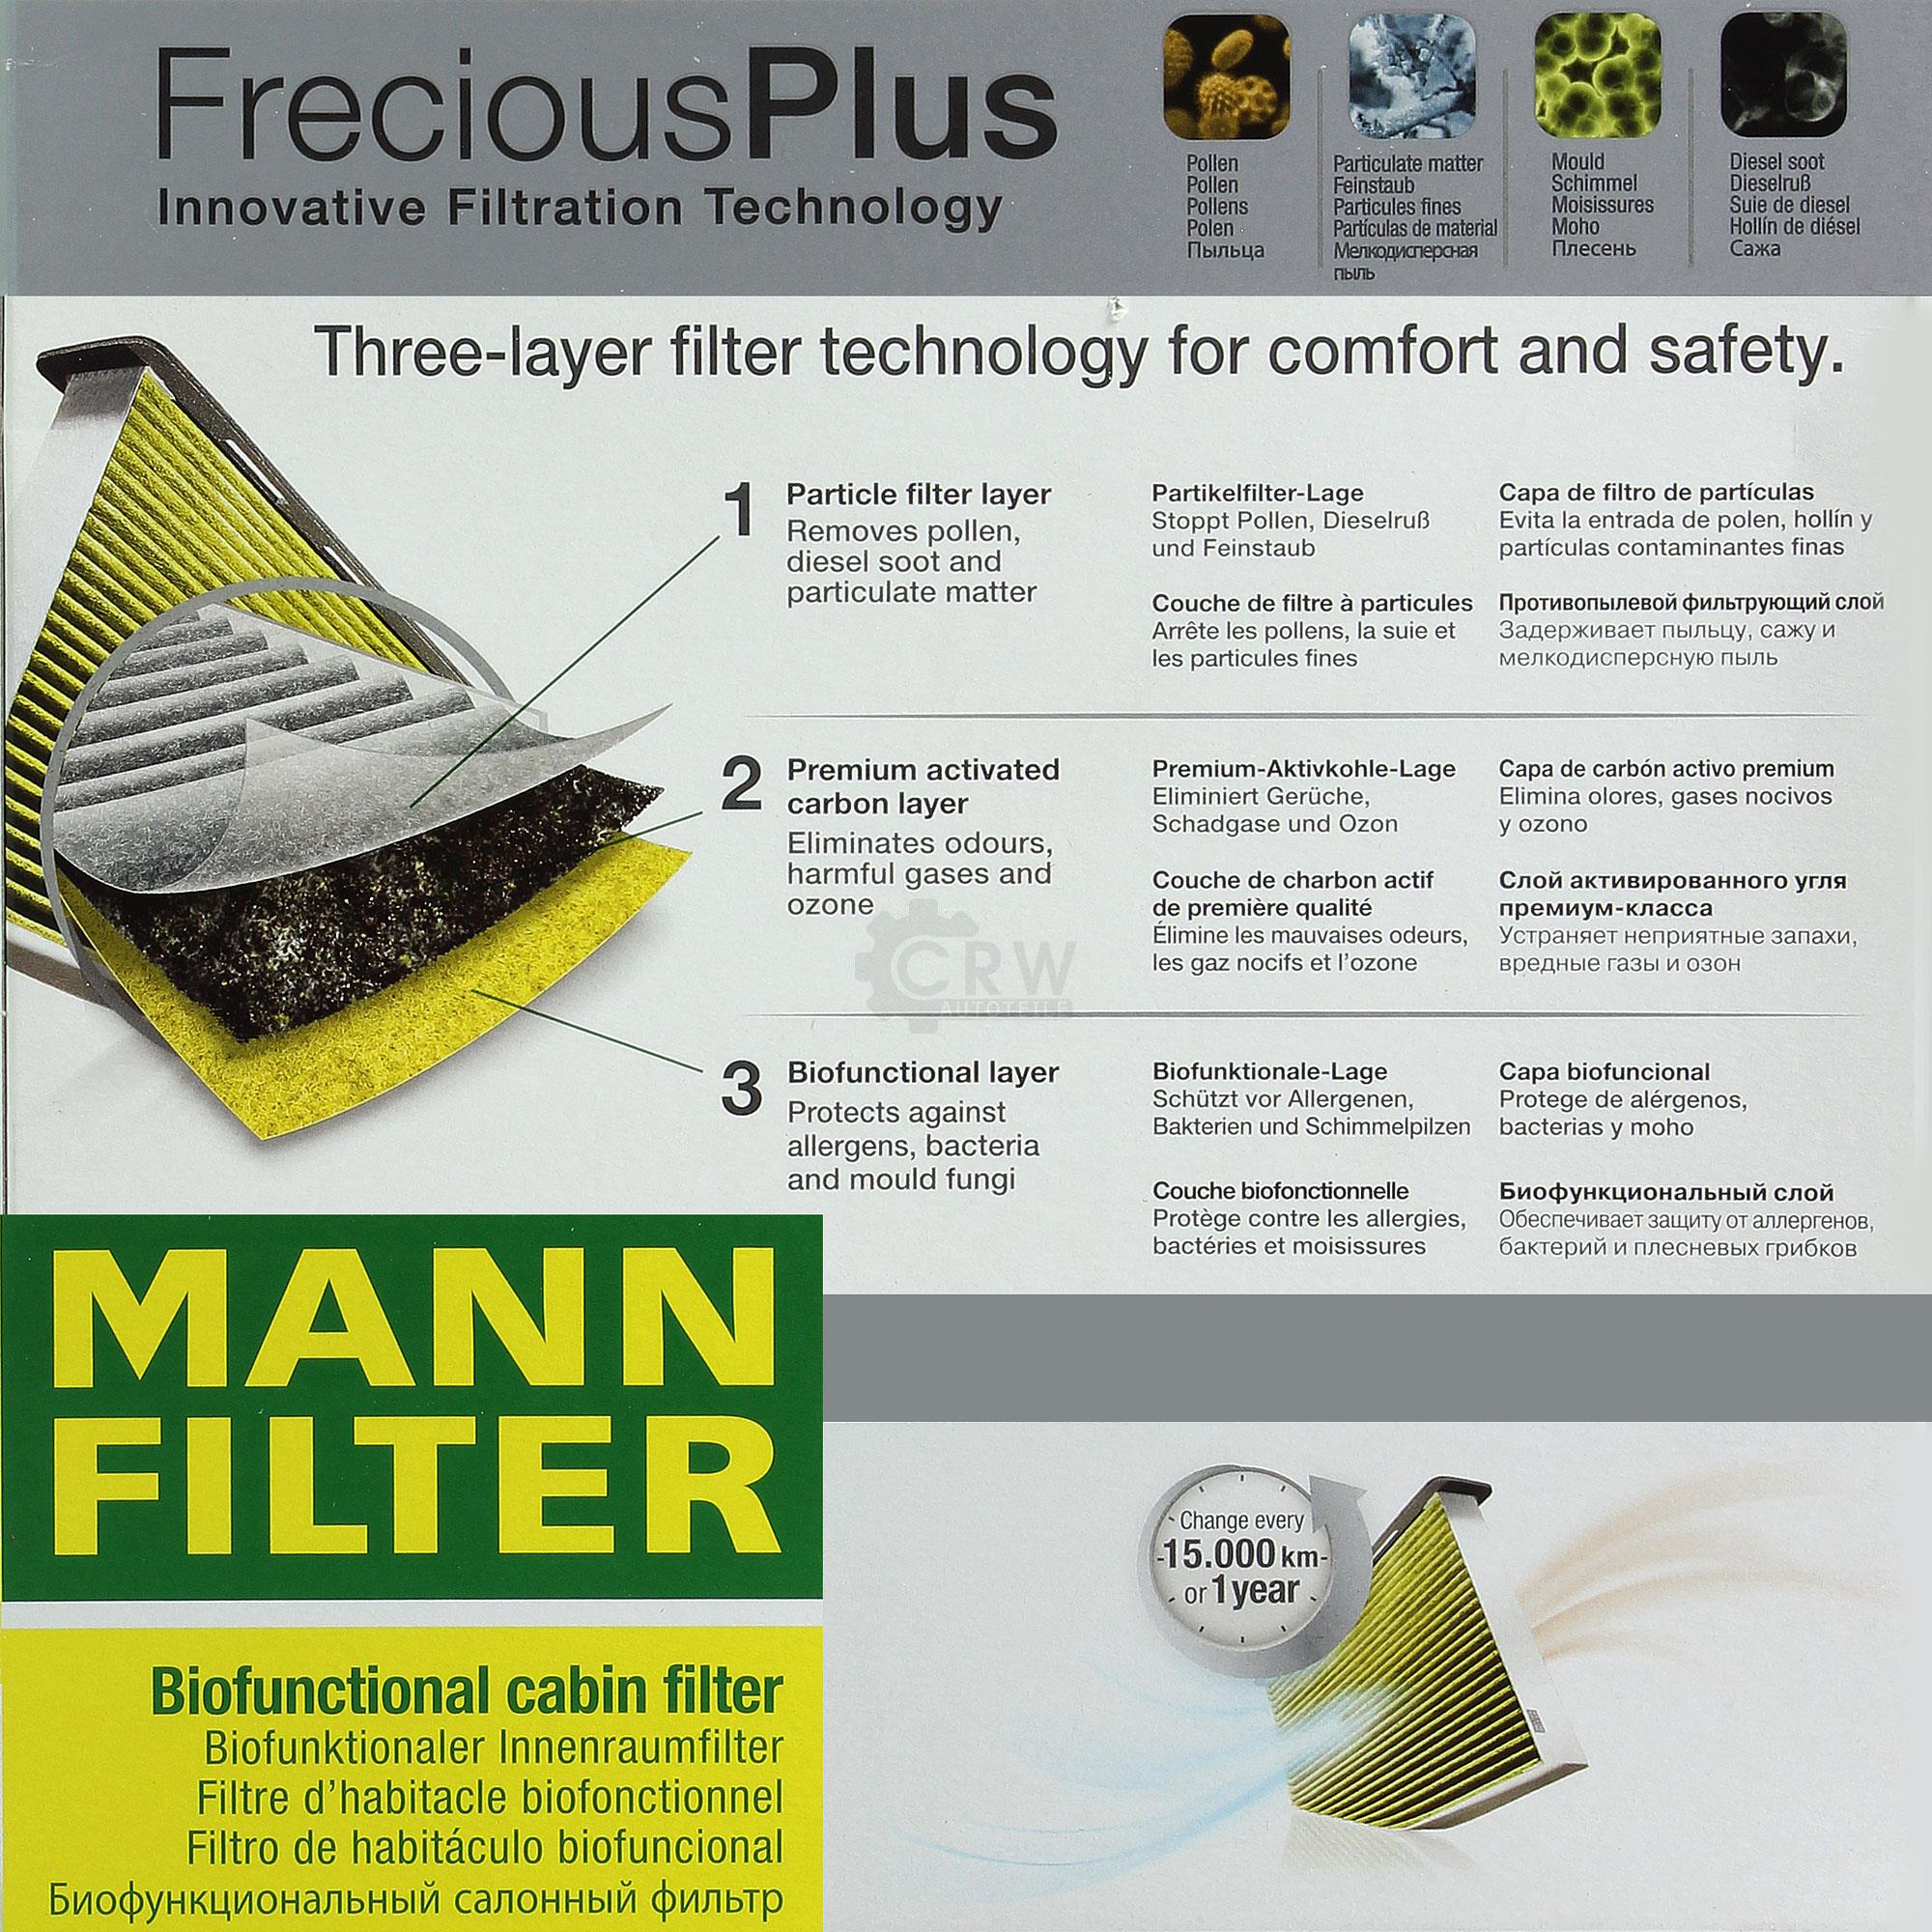 MANN-Filter Innenraumfilter Biofunctional für Allergiker FP 2745-2